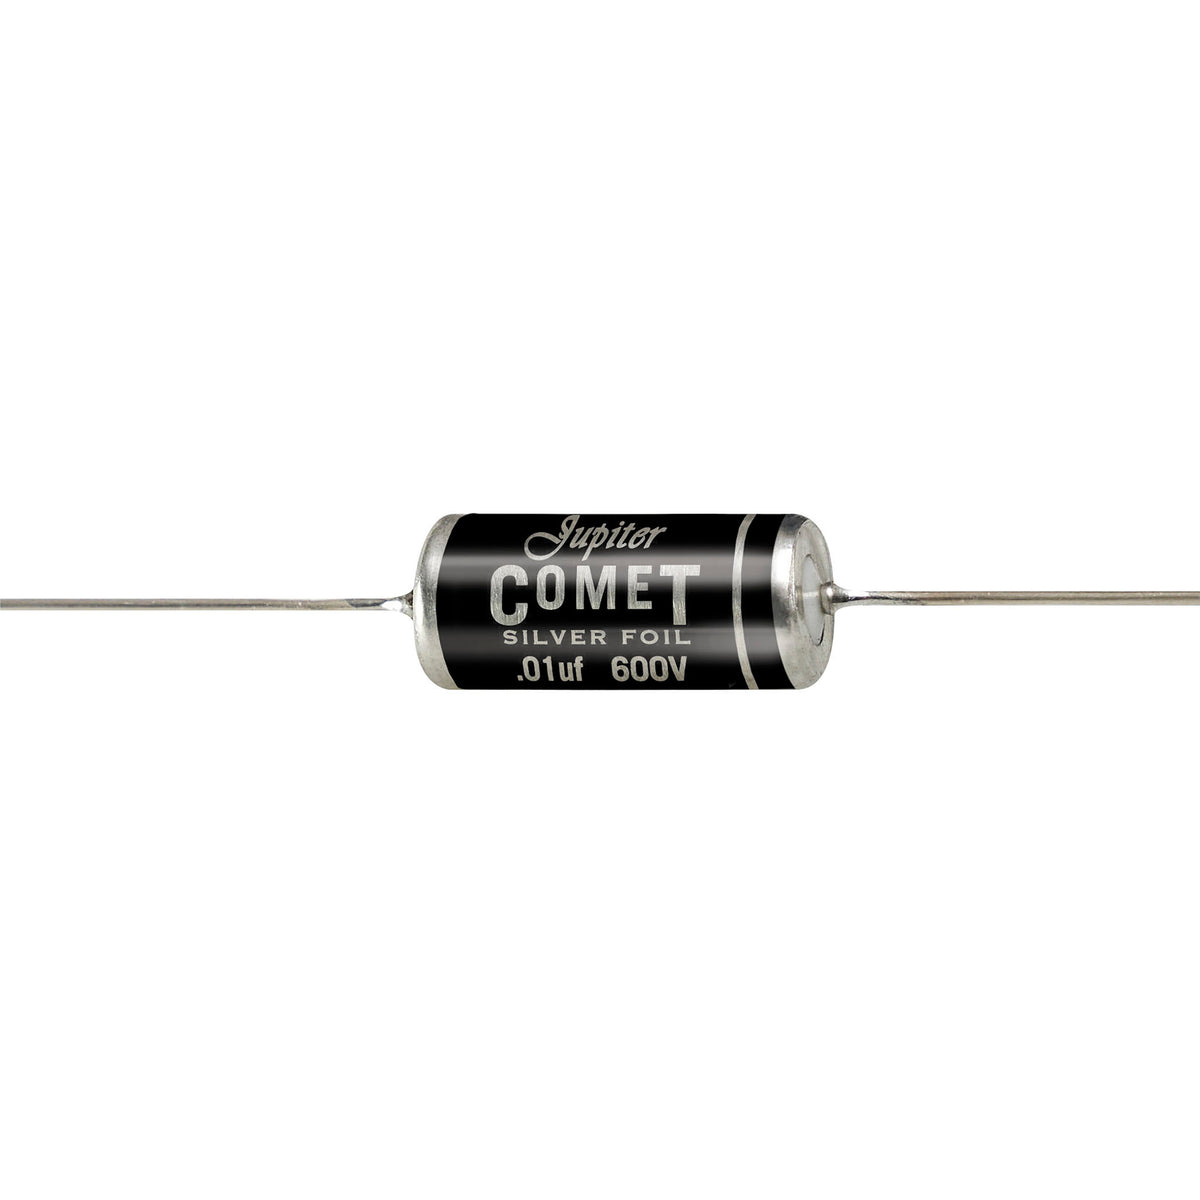 Comet Silver Foil - Paper-in-Oil Capacitors